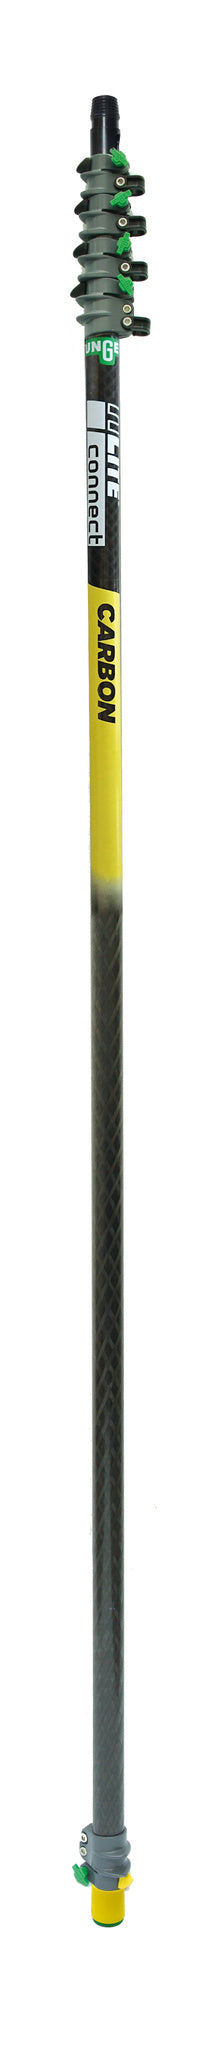 Unger nLite® Connect Master Pole CARBON 6.60 Meter